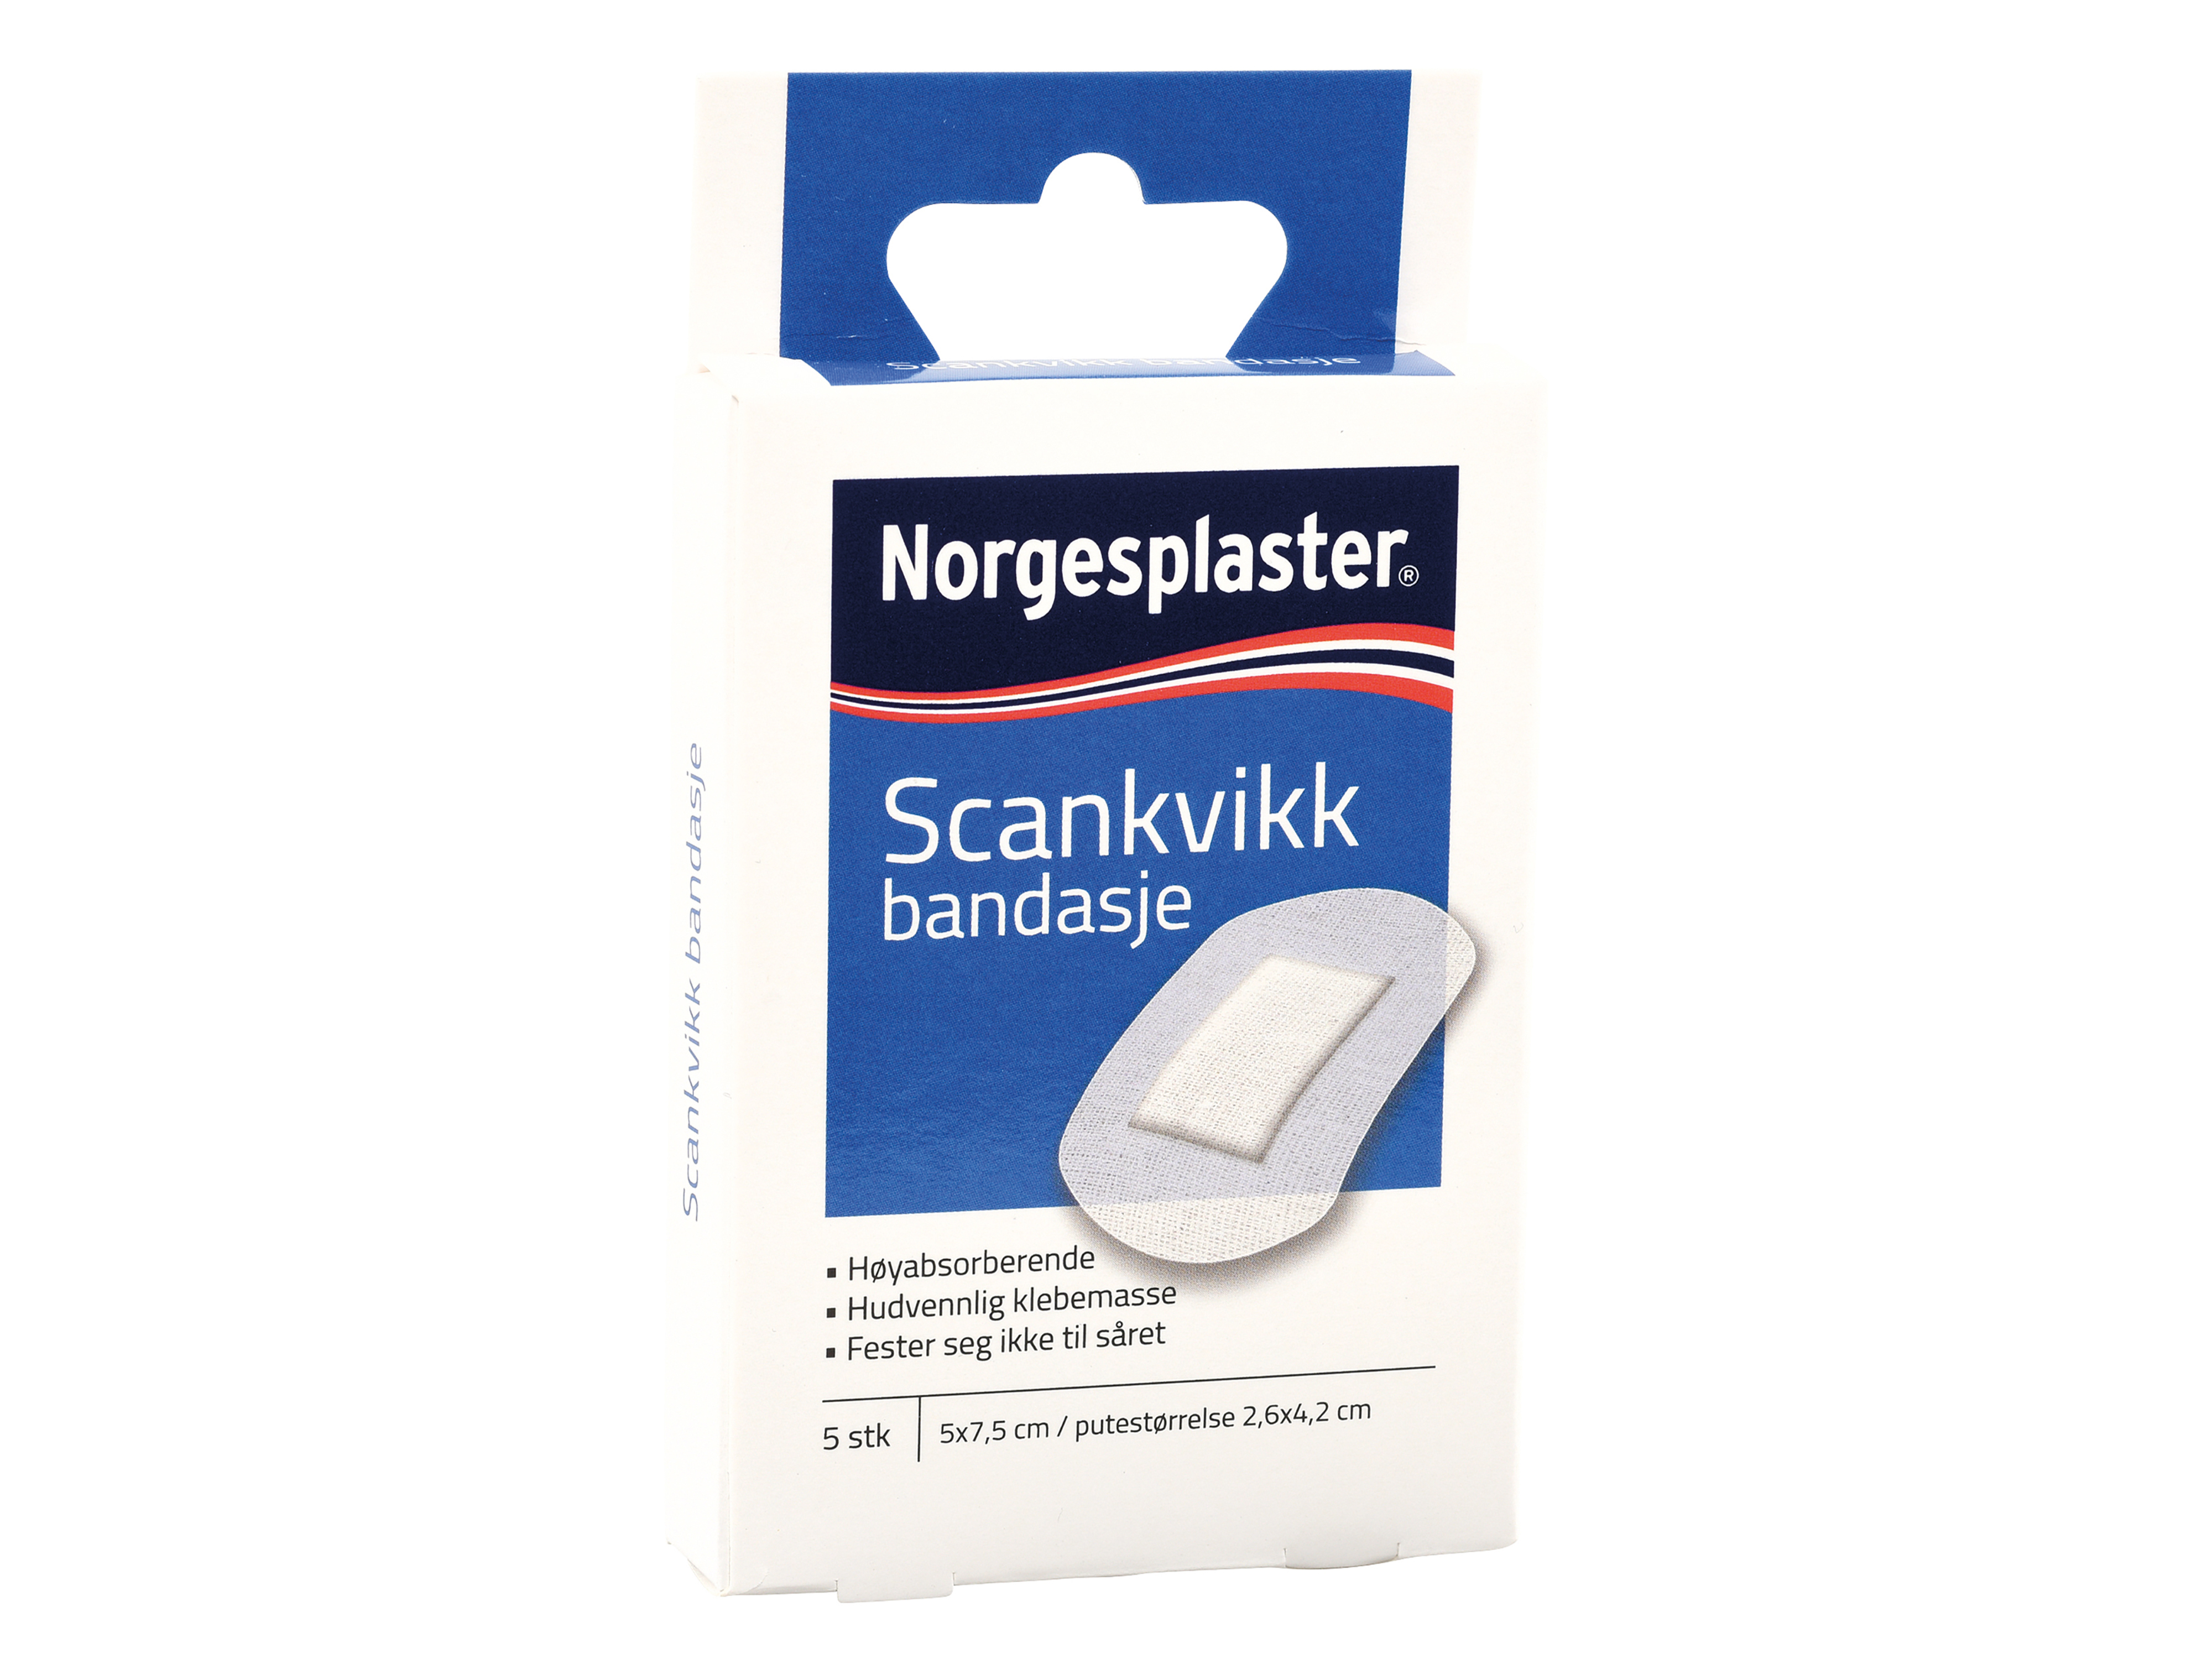 Norgesplaster Norgesplaster Scankvikk bandasje, 5x7,5 cm, 5 stk.